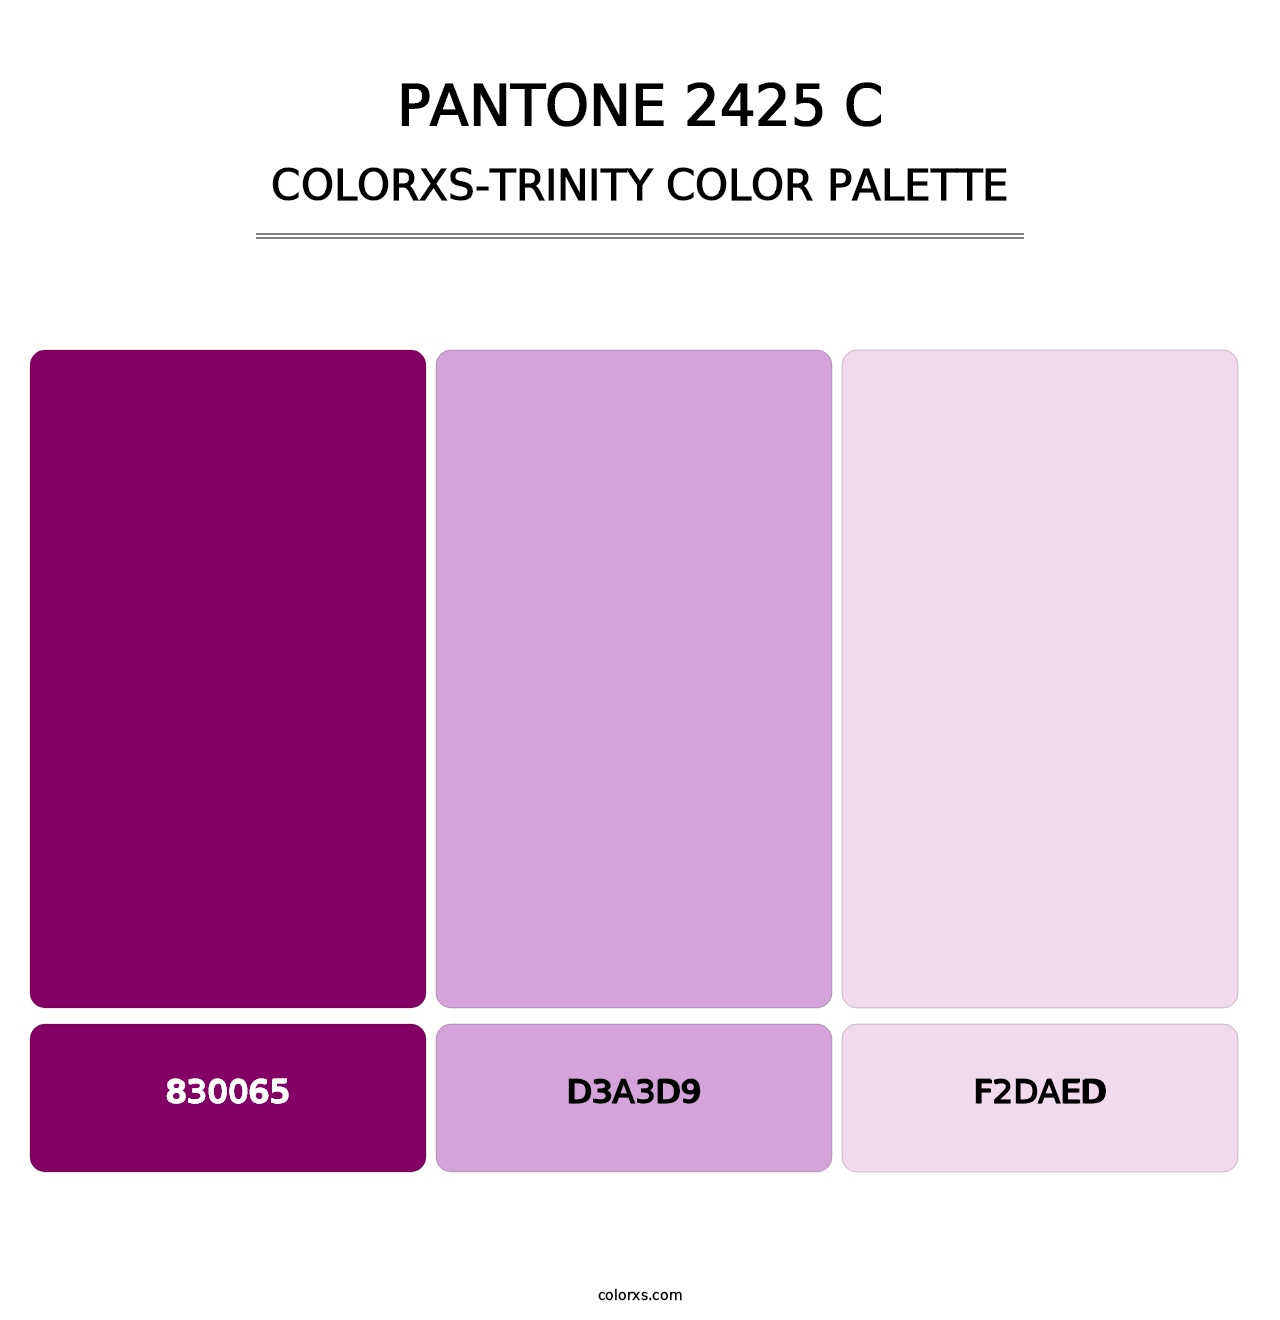 PANTONE 2425 C - Colorxs Trinity Palette